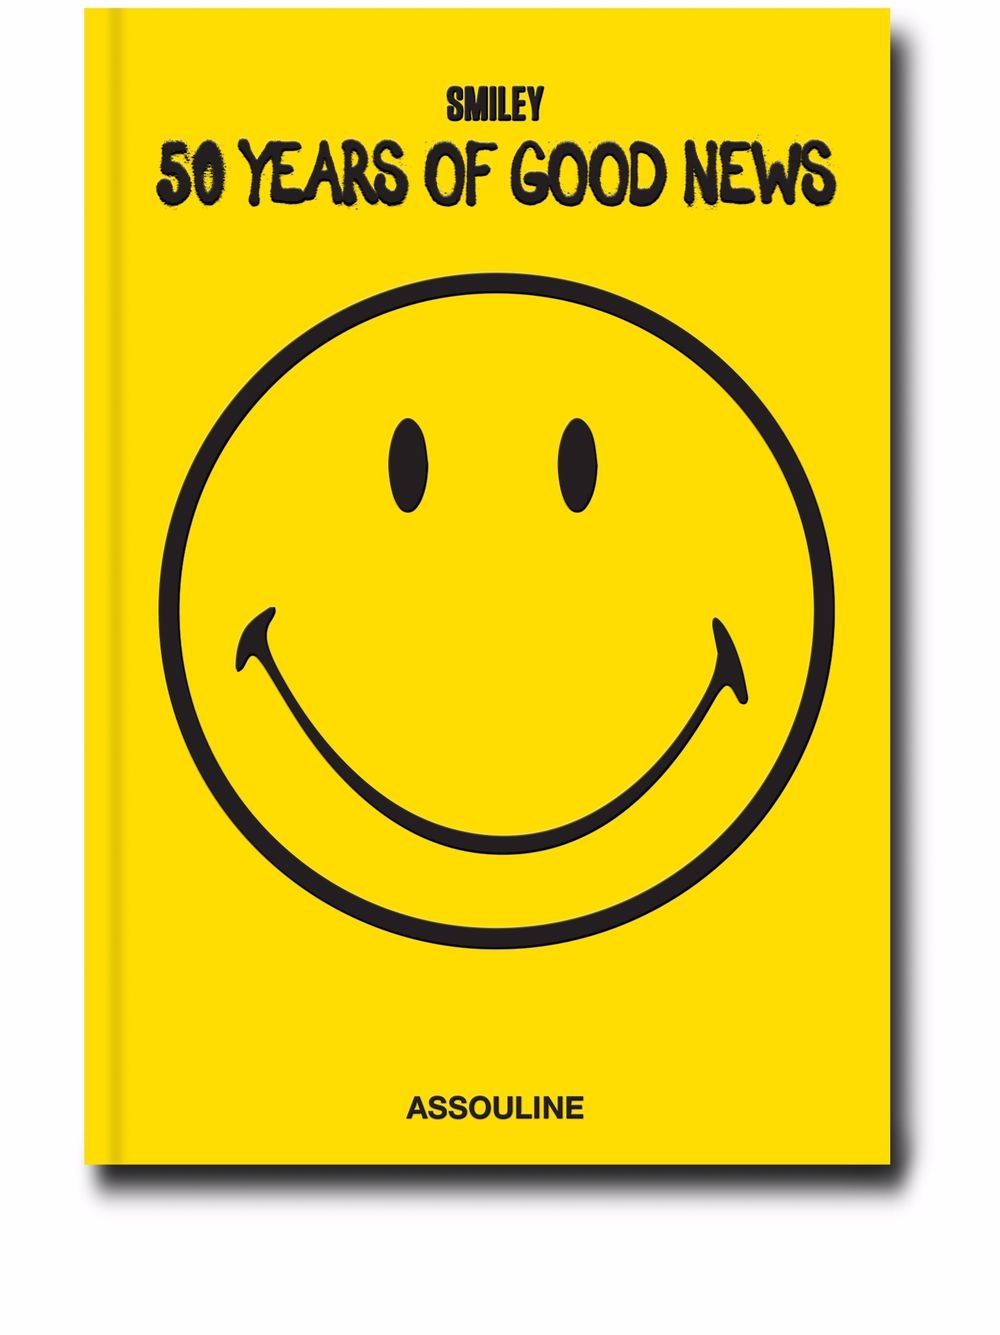 Assouline Smiley: 50 Years of Good News book - Yellow von Assouline